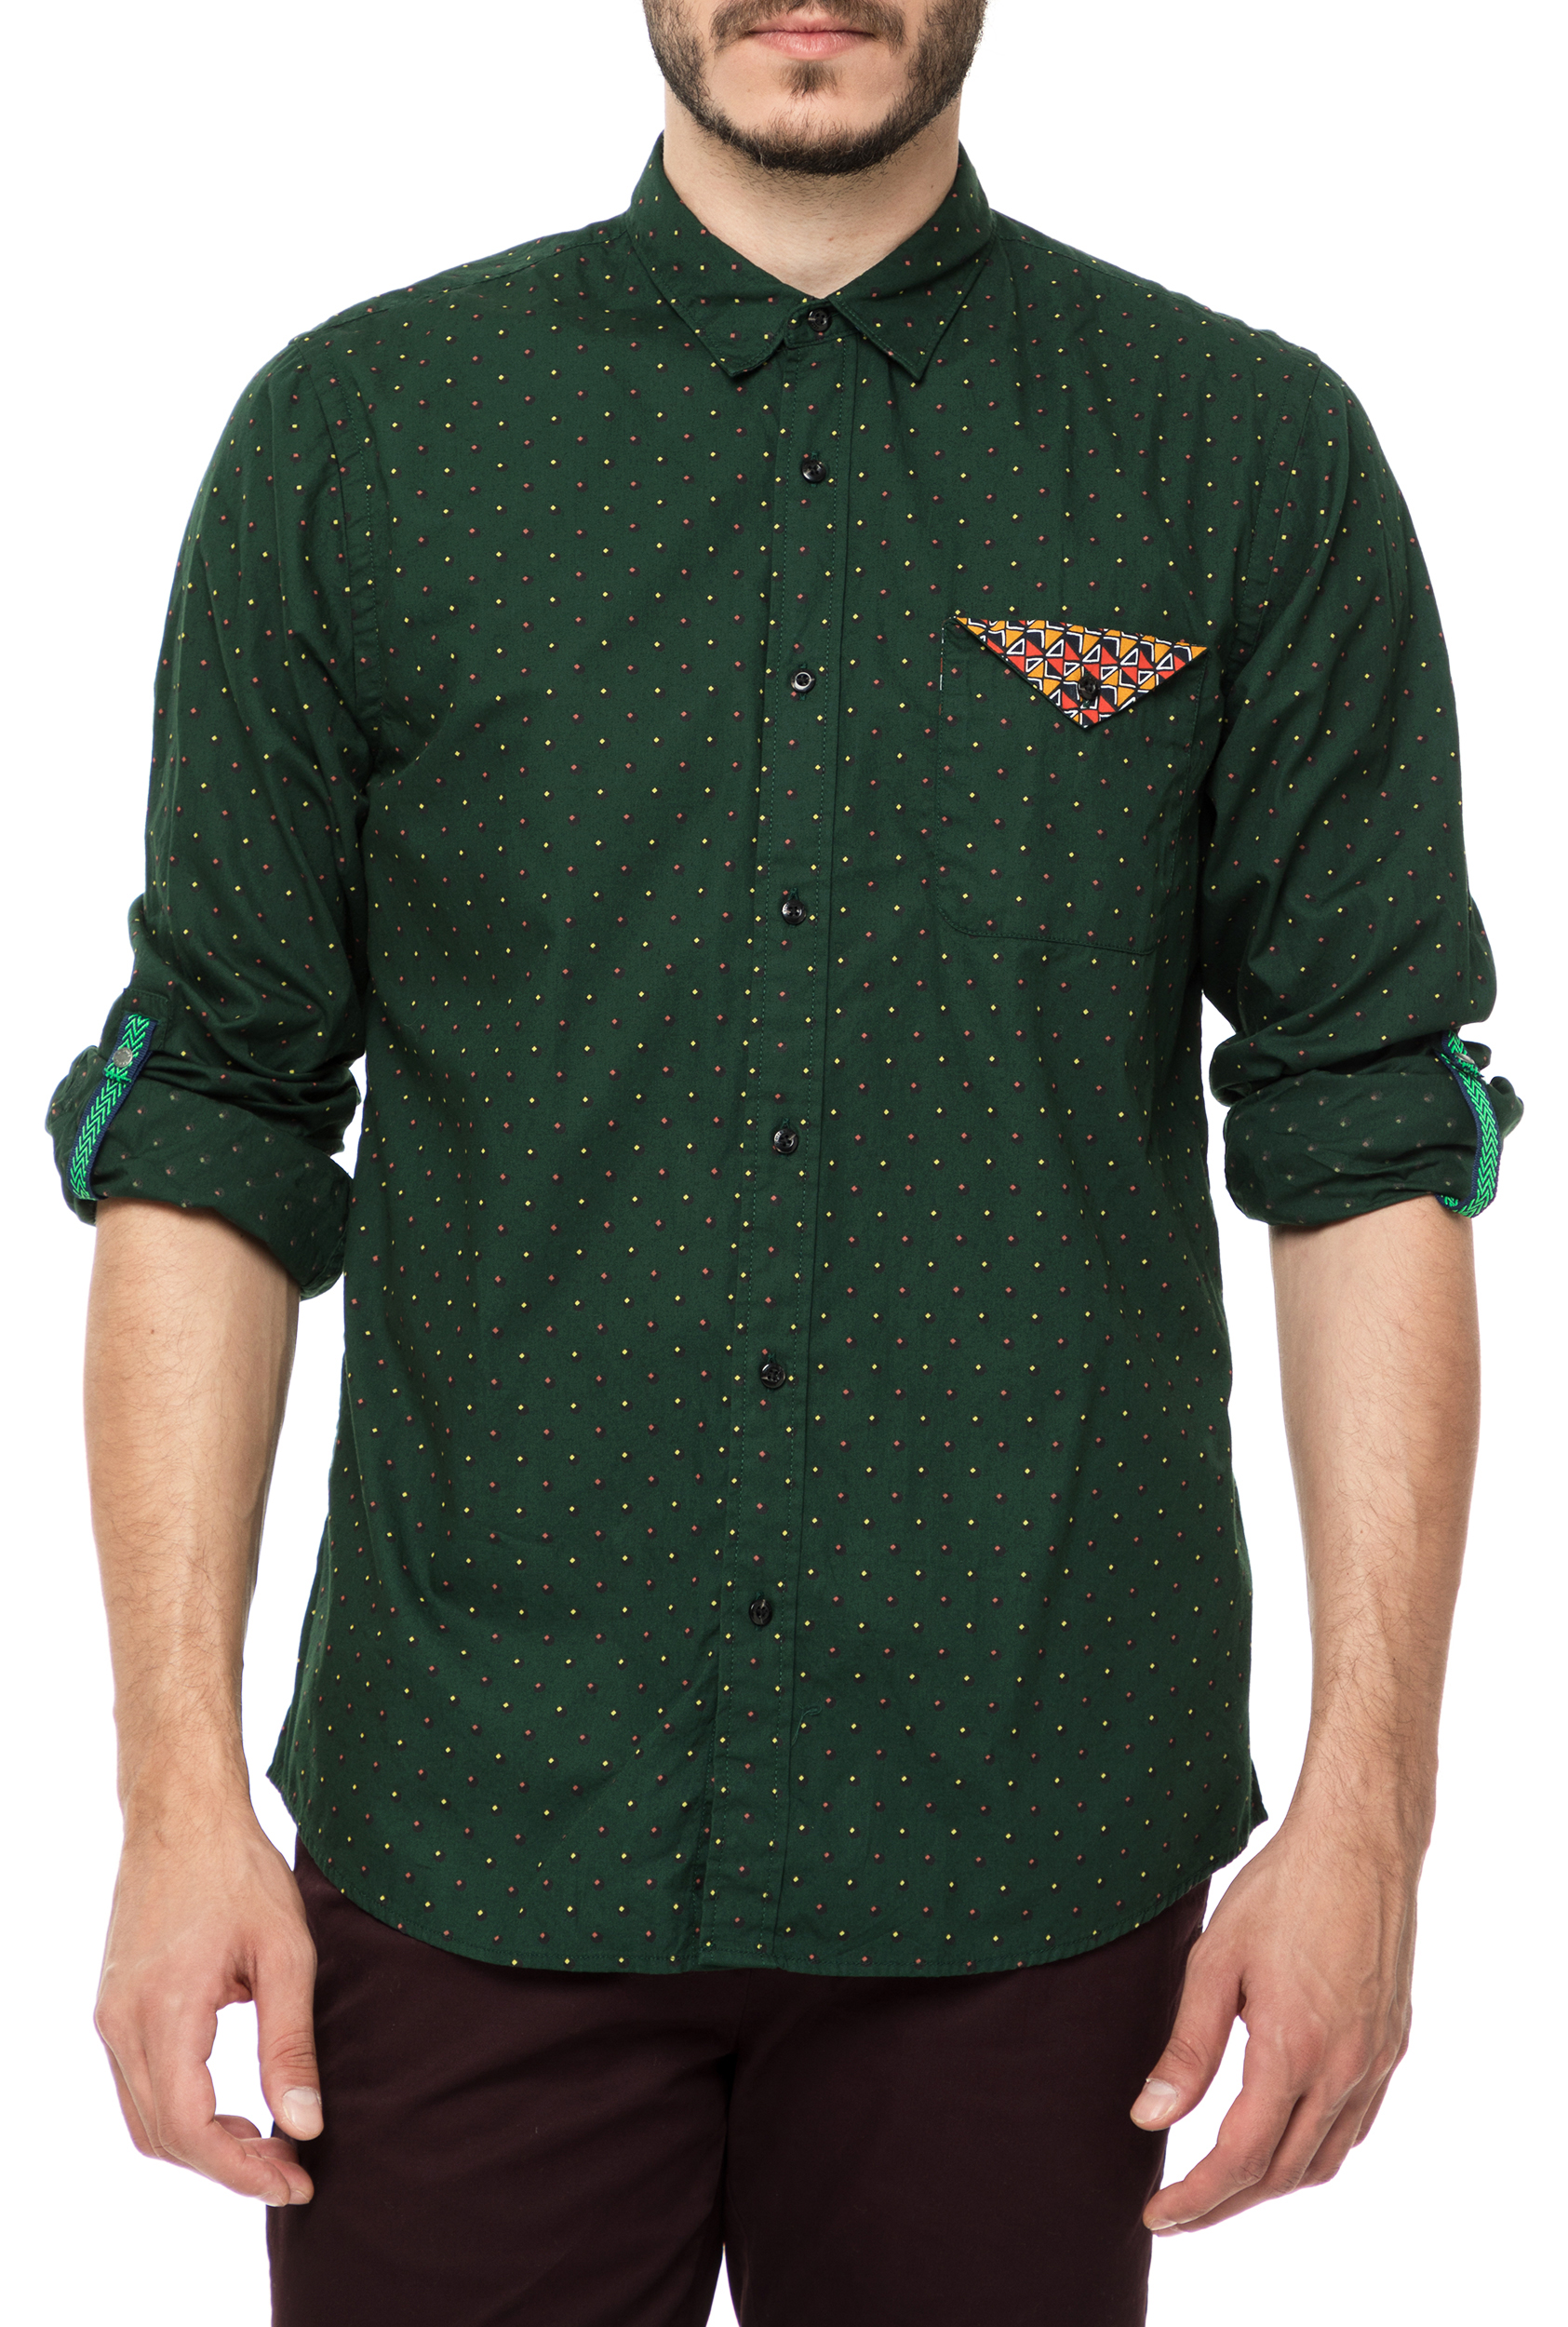 SCOTCH & SODA SCOTCH & SODA - Ανδρικό μαικρυμάνικο πουκάμισο SCOTCH & SODA πράσινο